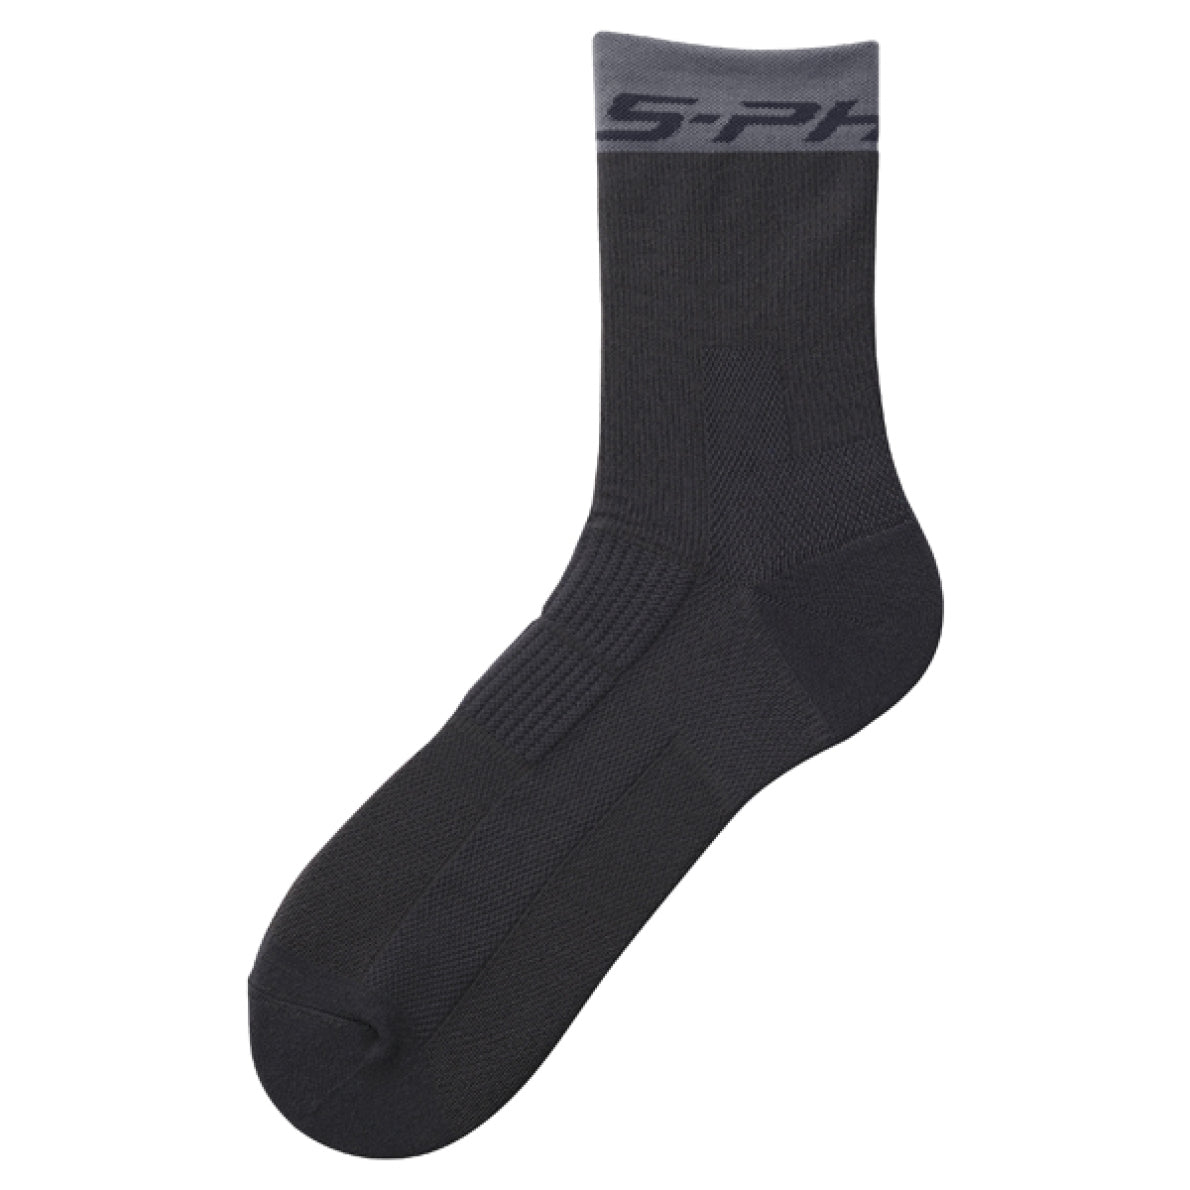 Shimano S-Phyre Tall Socks